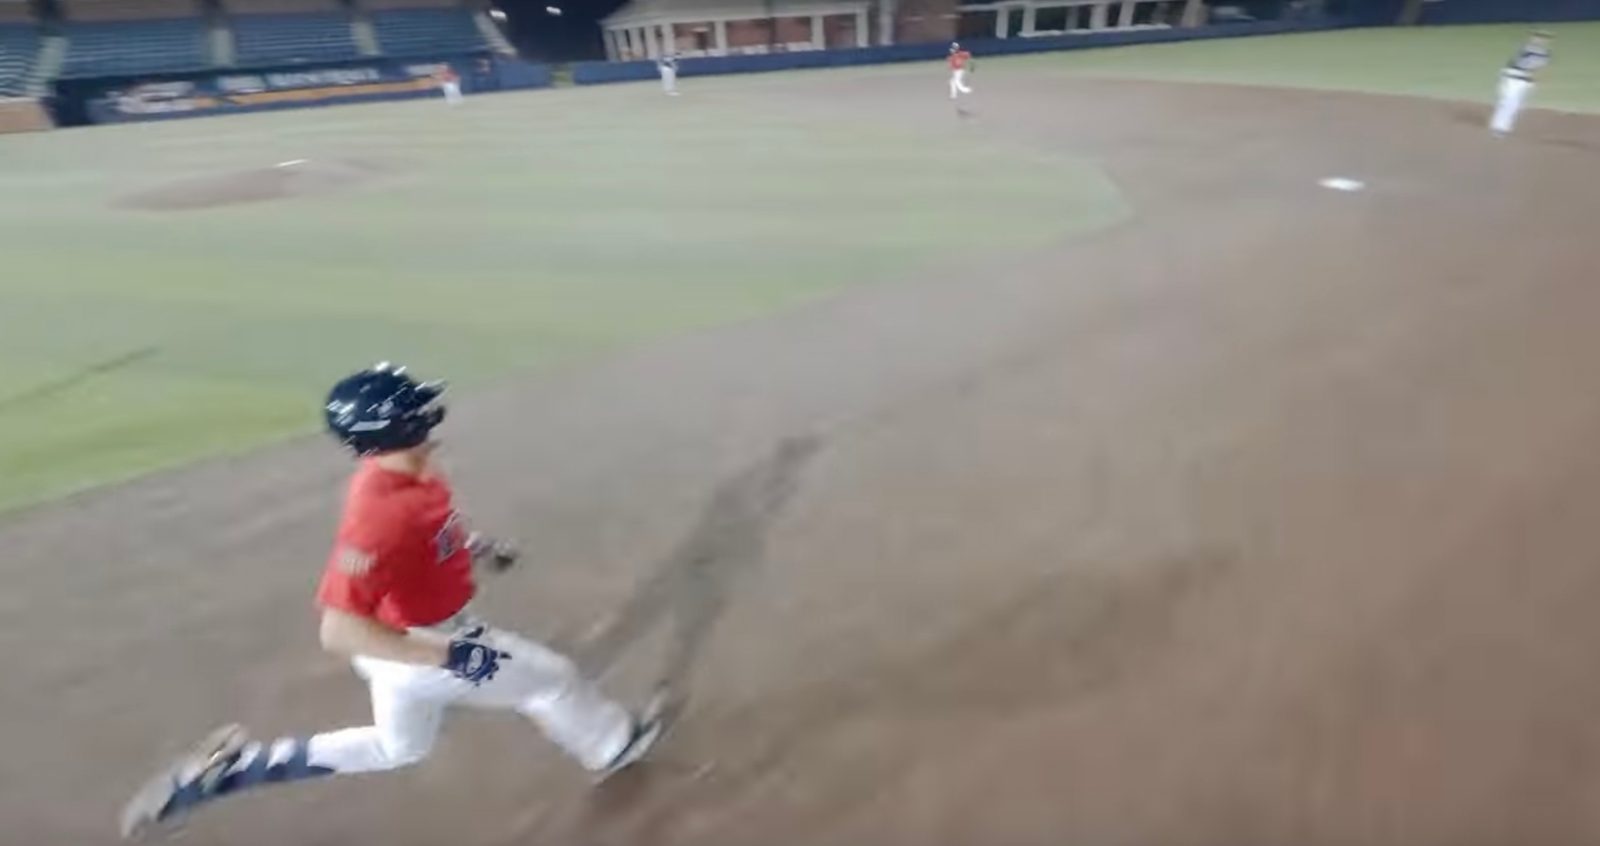 MLB DJI drone baseball